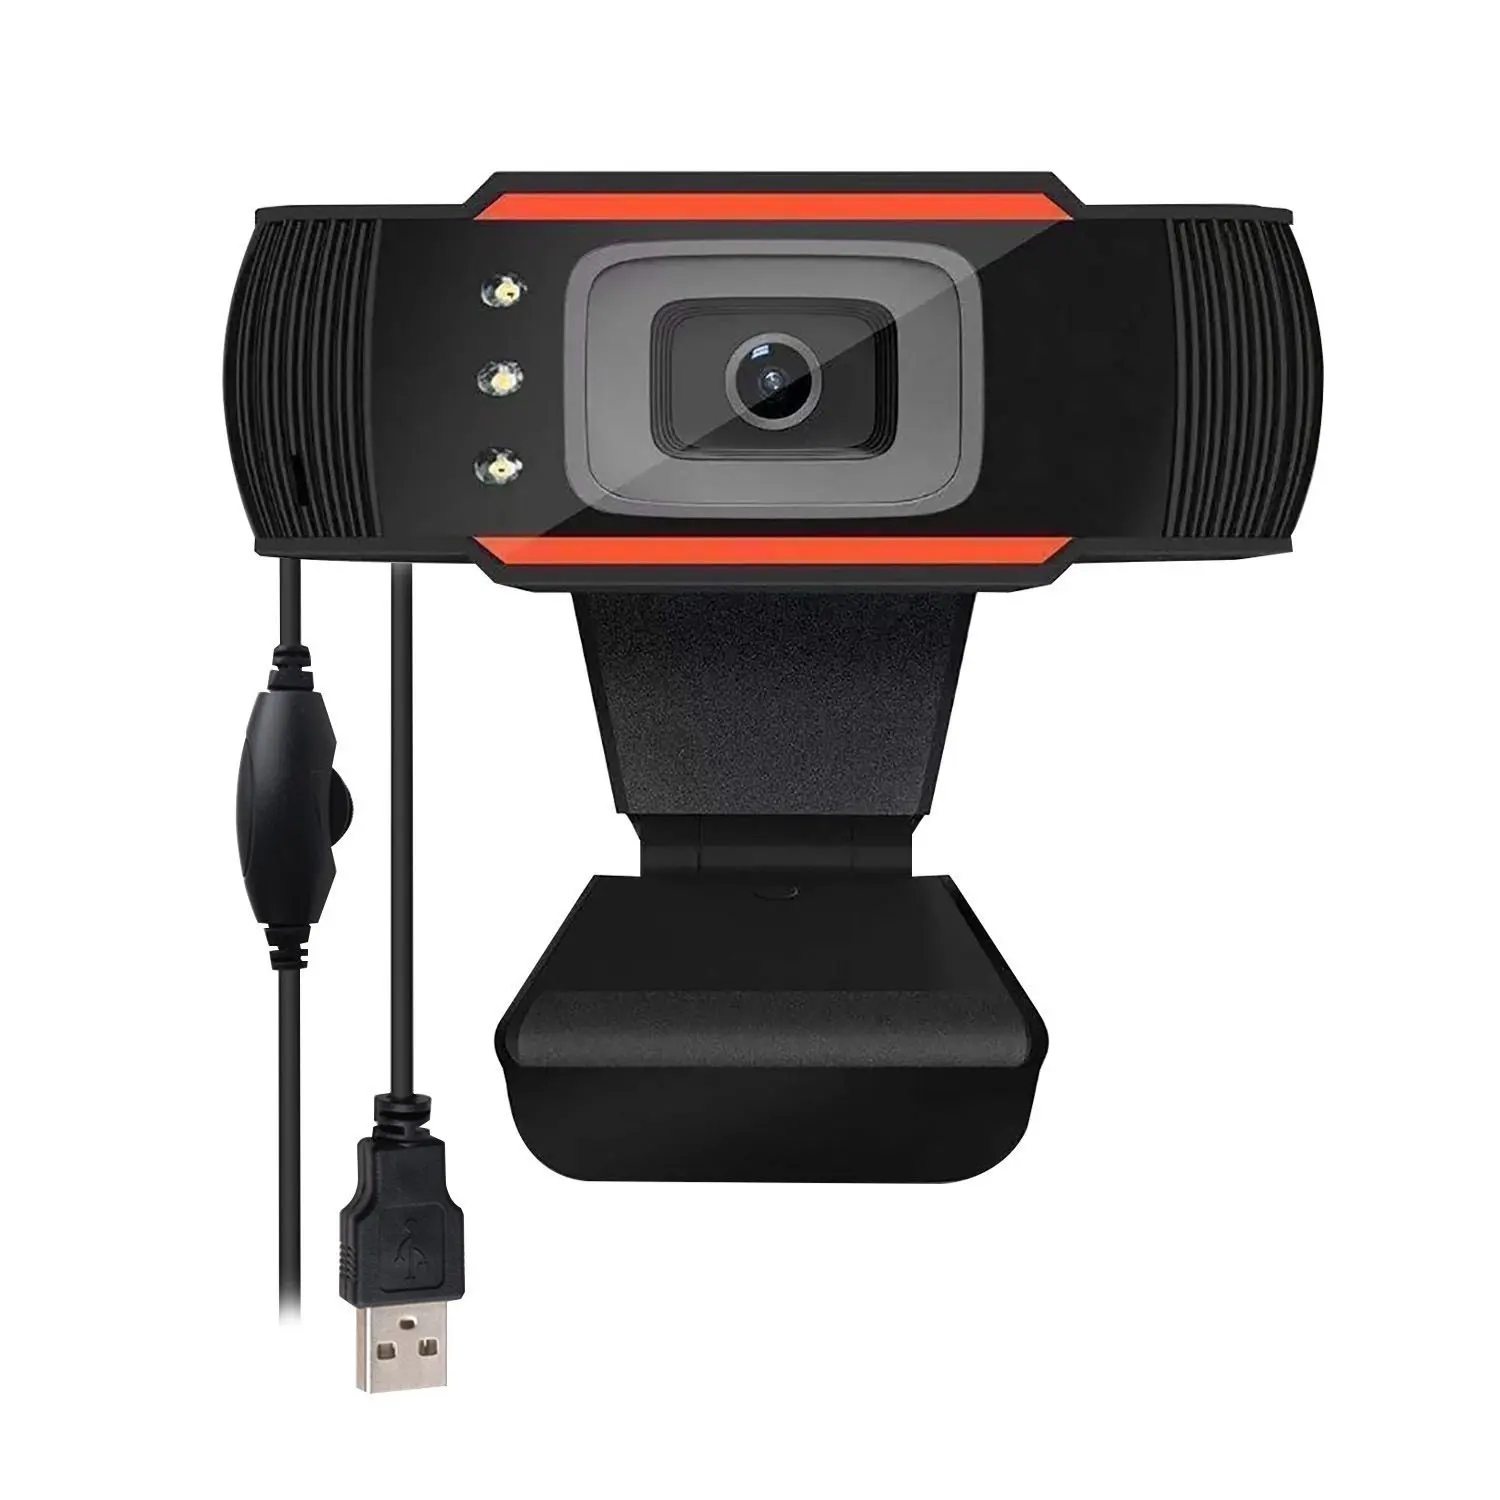 Web kamera kam 480p 720p 1080p full hd 1920 canlı akışı video konferans kameraları pc dizüstü video kameralar web kamerası